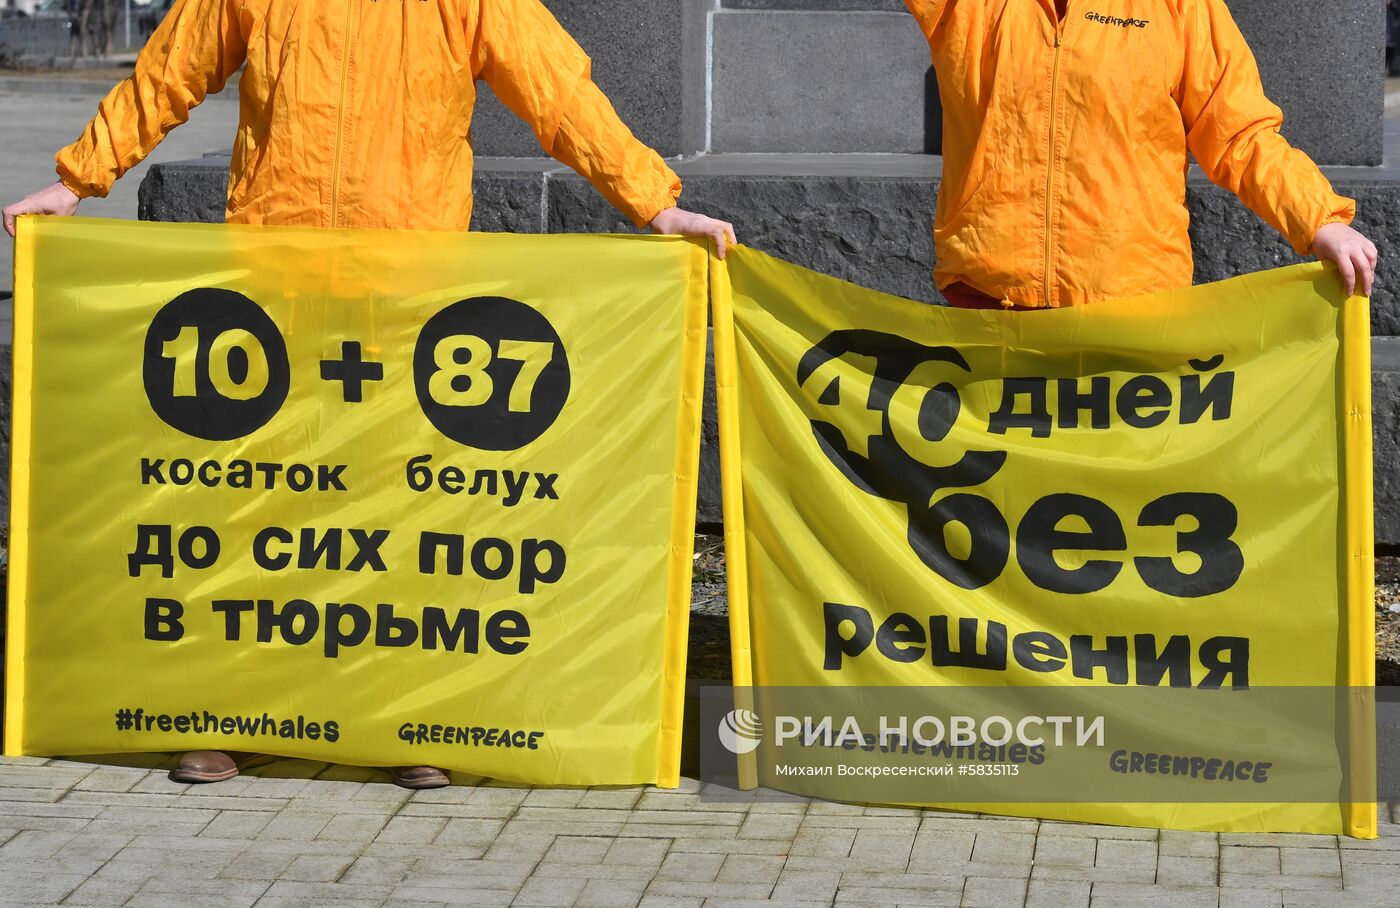 Акция в защиту белух и косаток в Москве